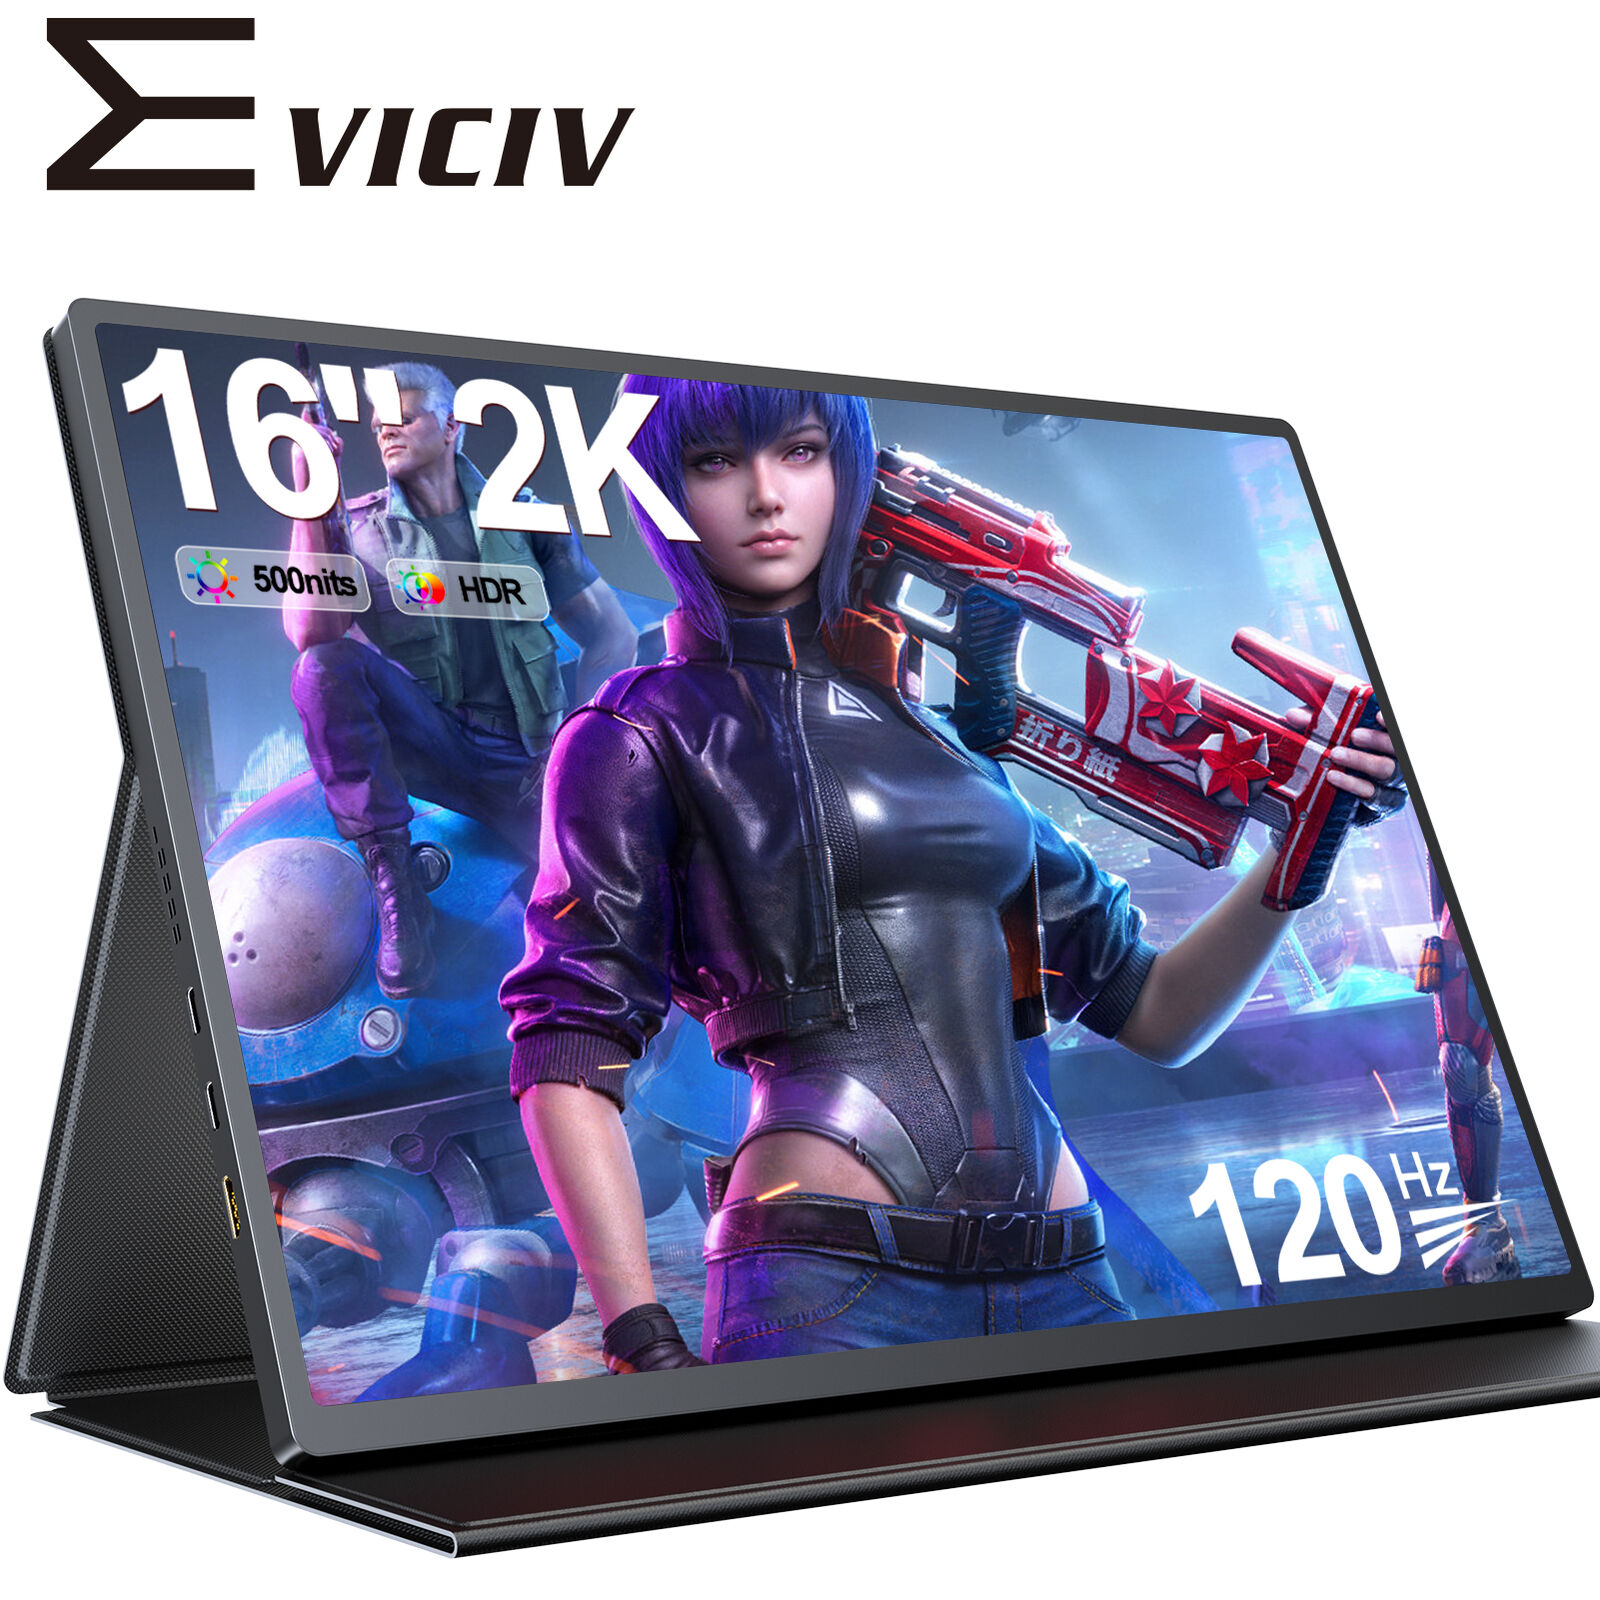 2.5K 2K Portable Monitor EVICIV 16